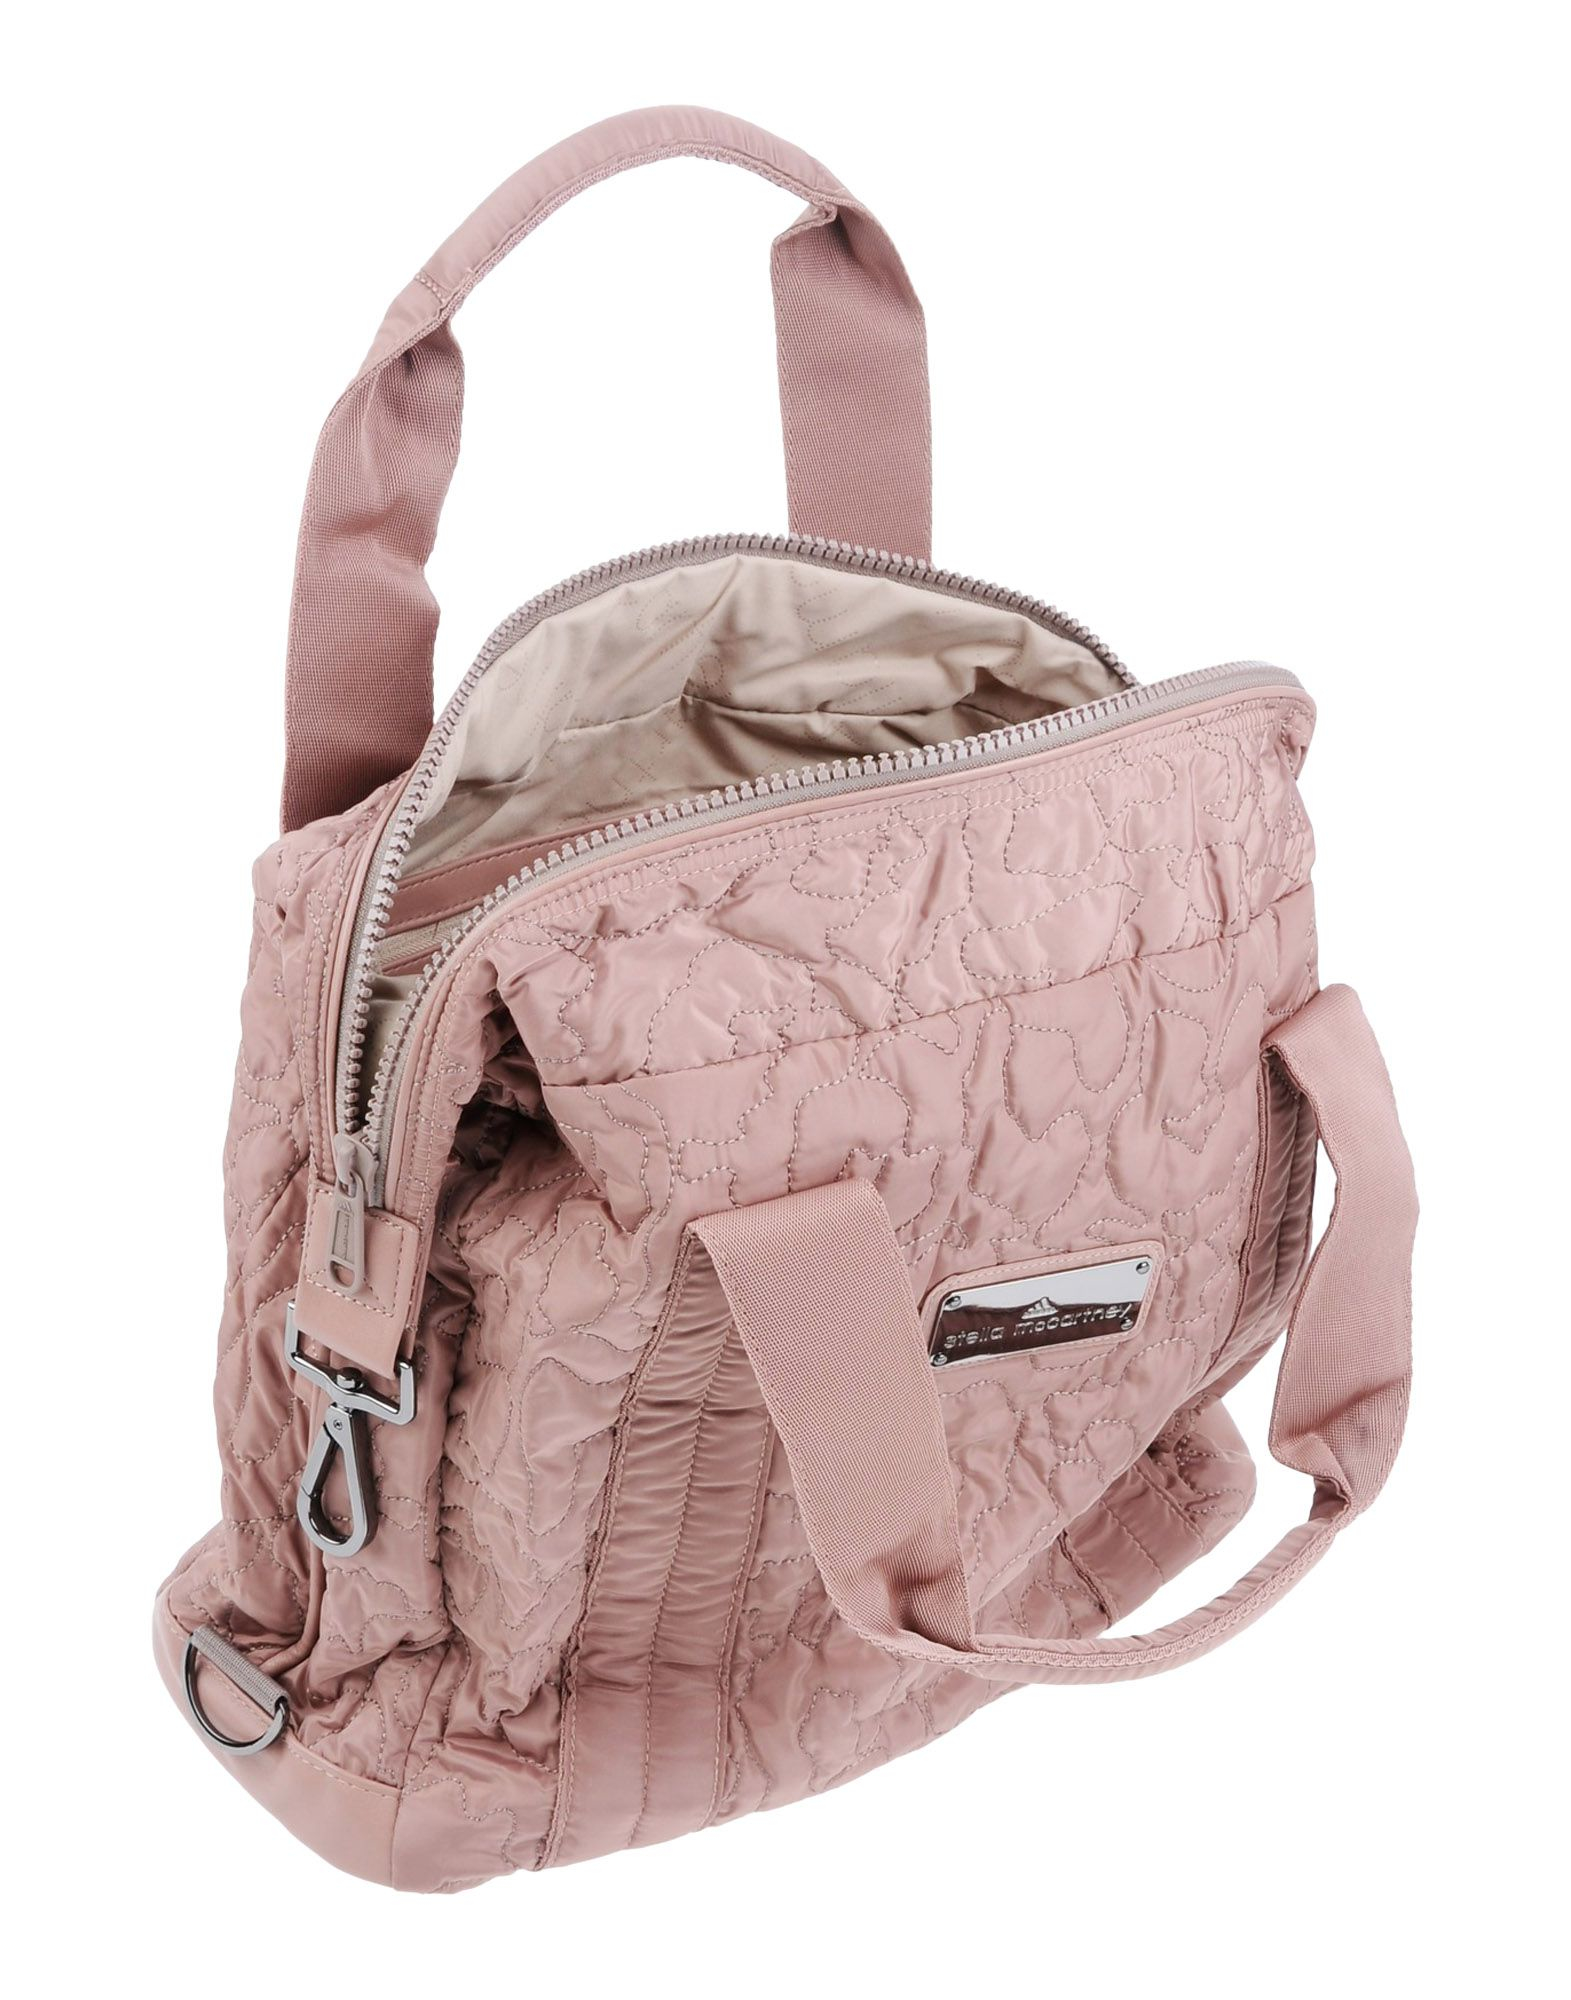 adidas By Stella McCartney Medium Quilted Gym Bag in Pastel Pink (Pink) -  Lyst